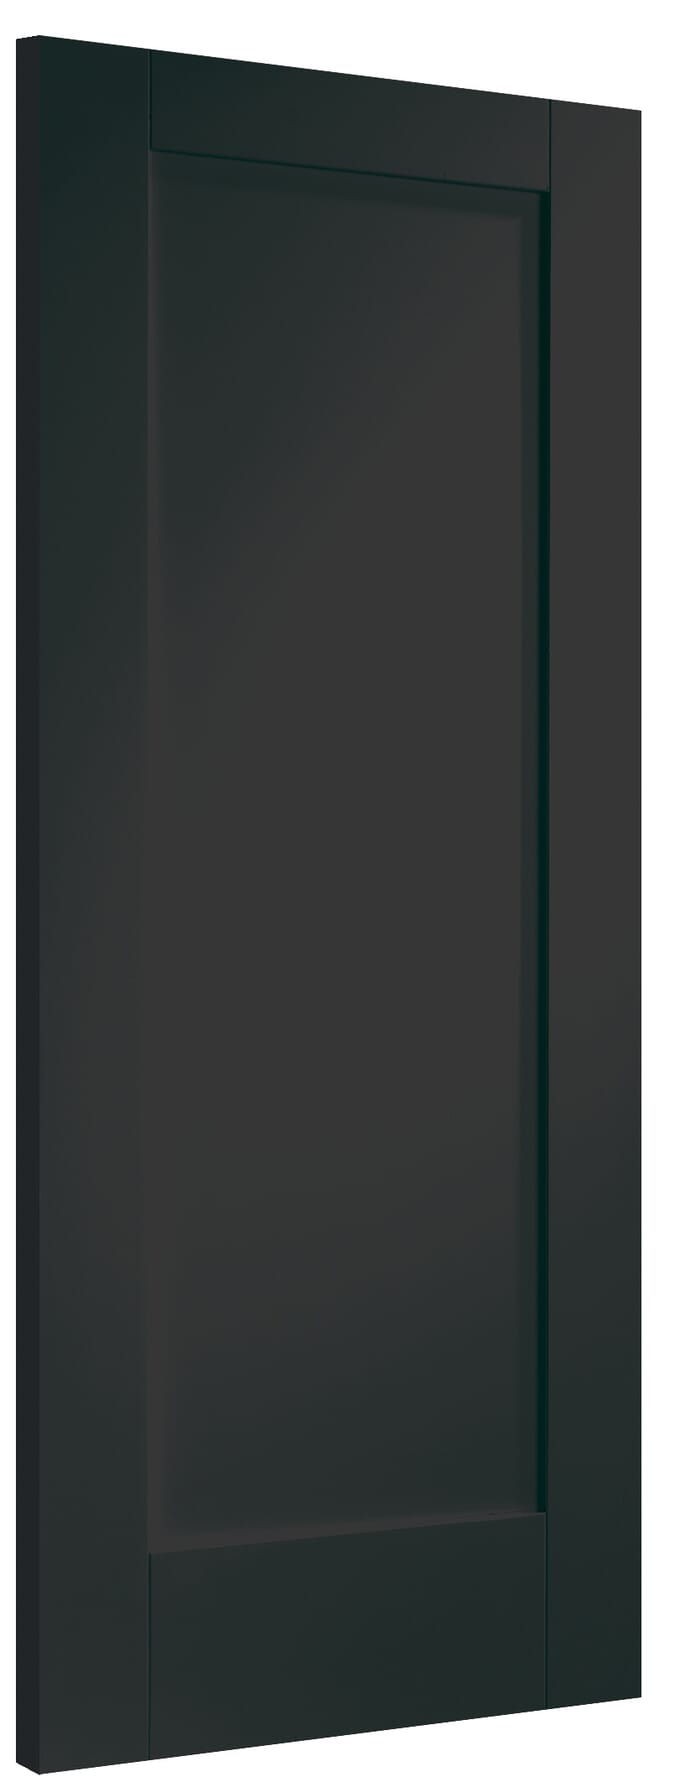 762x1981x35mm (30") Pattern 10 Cosmos Black Internal Doors